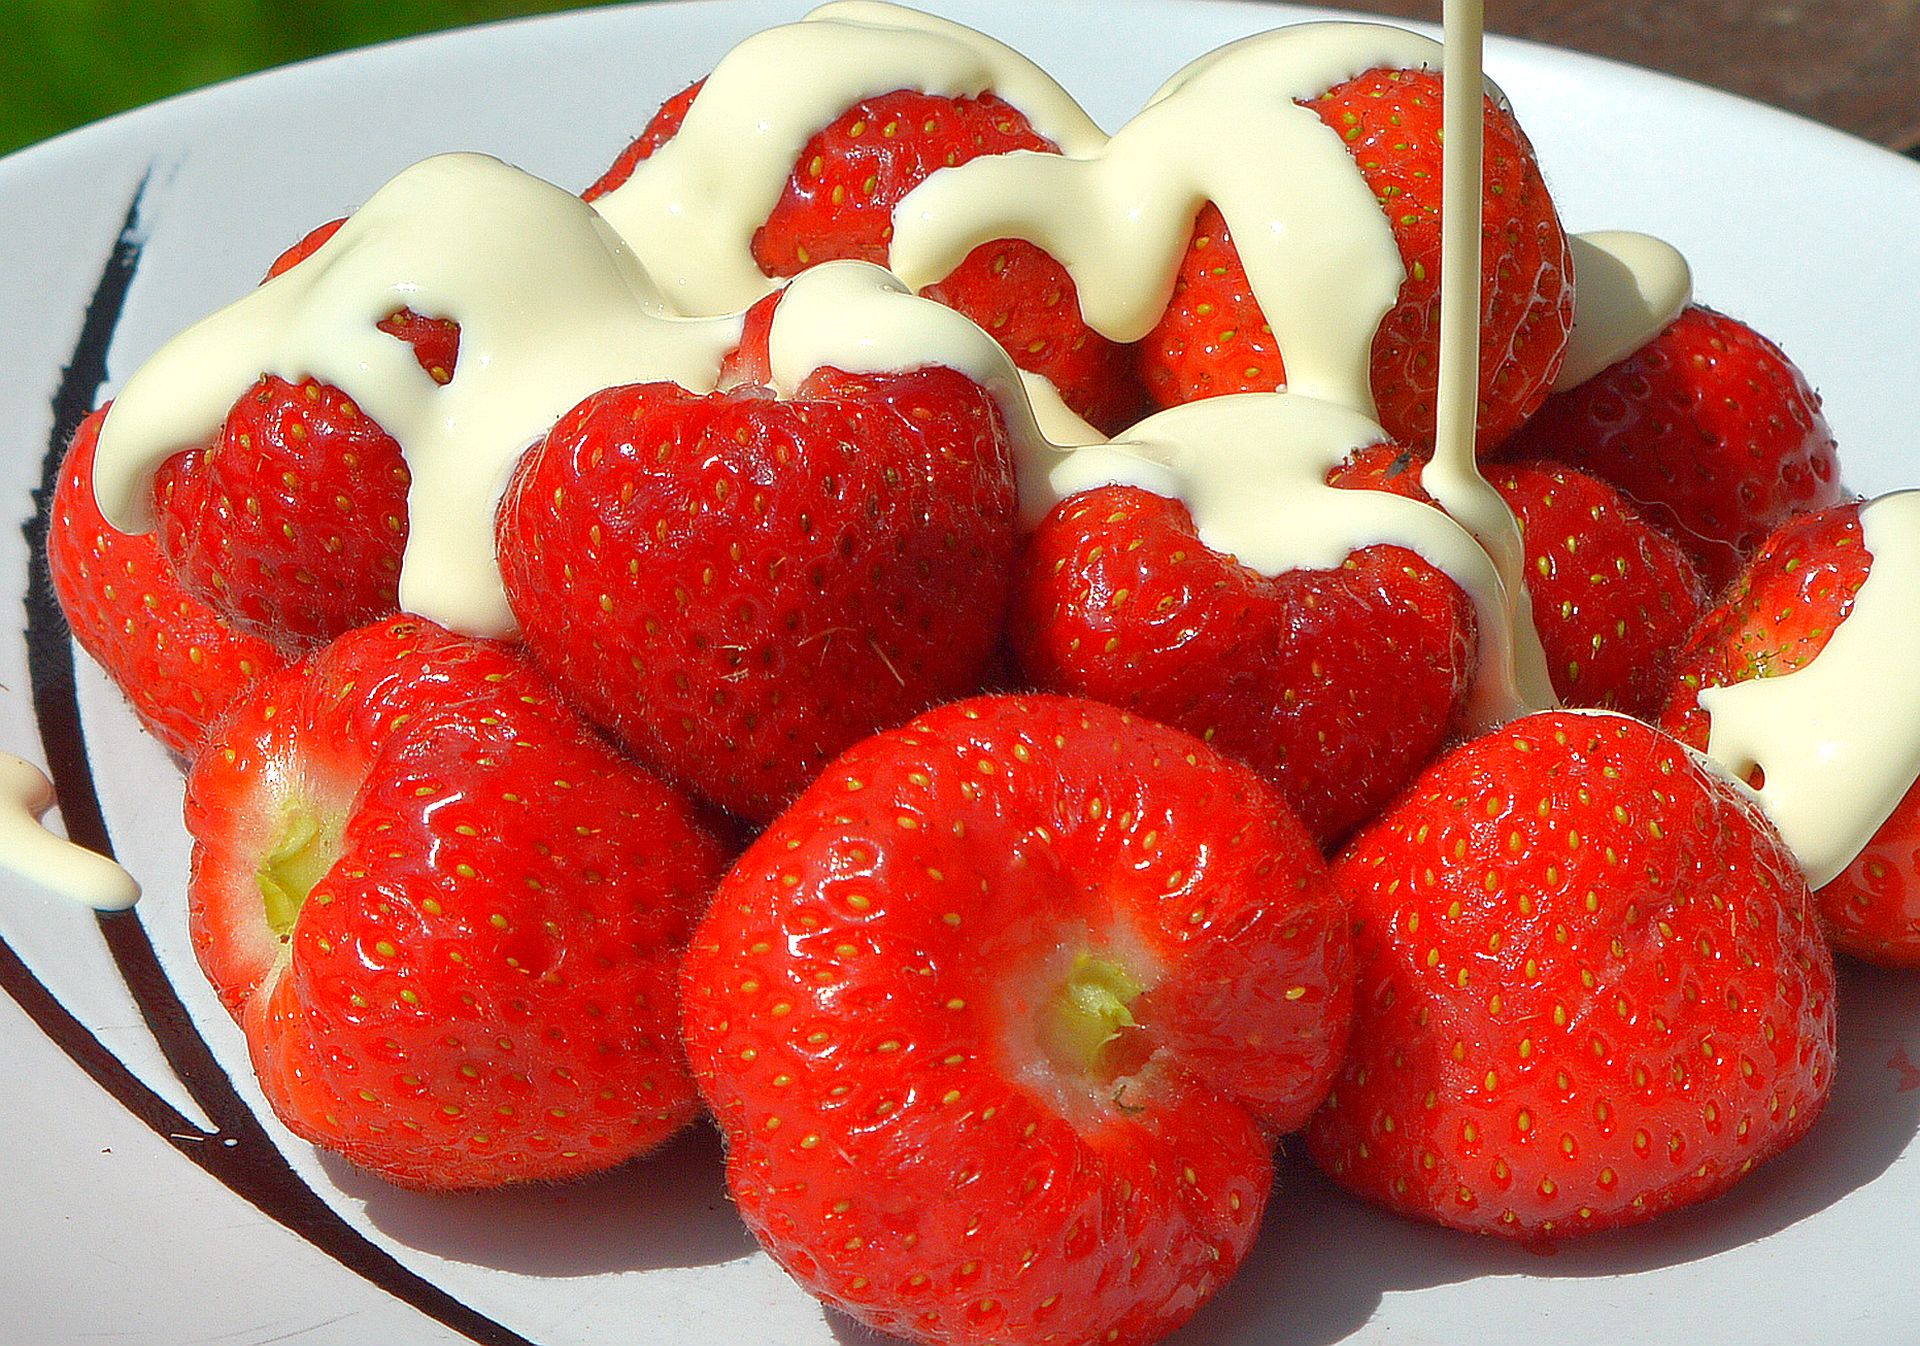 strawberries with cream